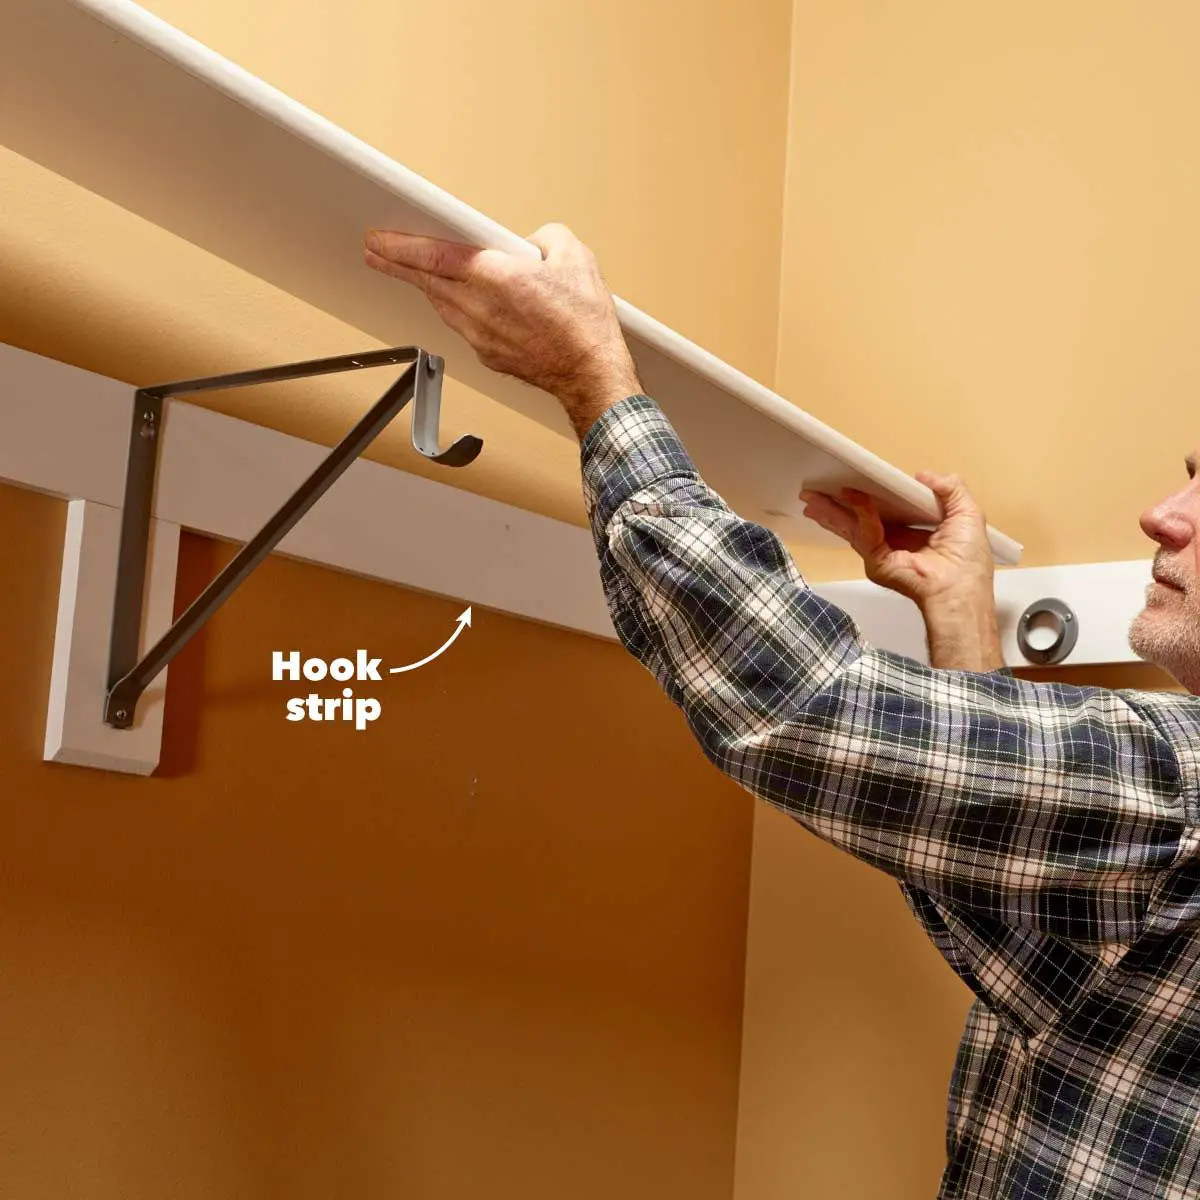 How to Hang Shelves